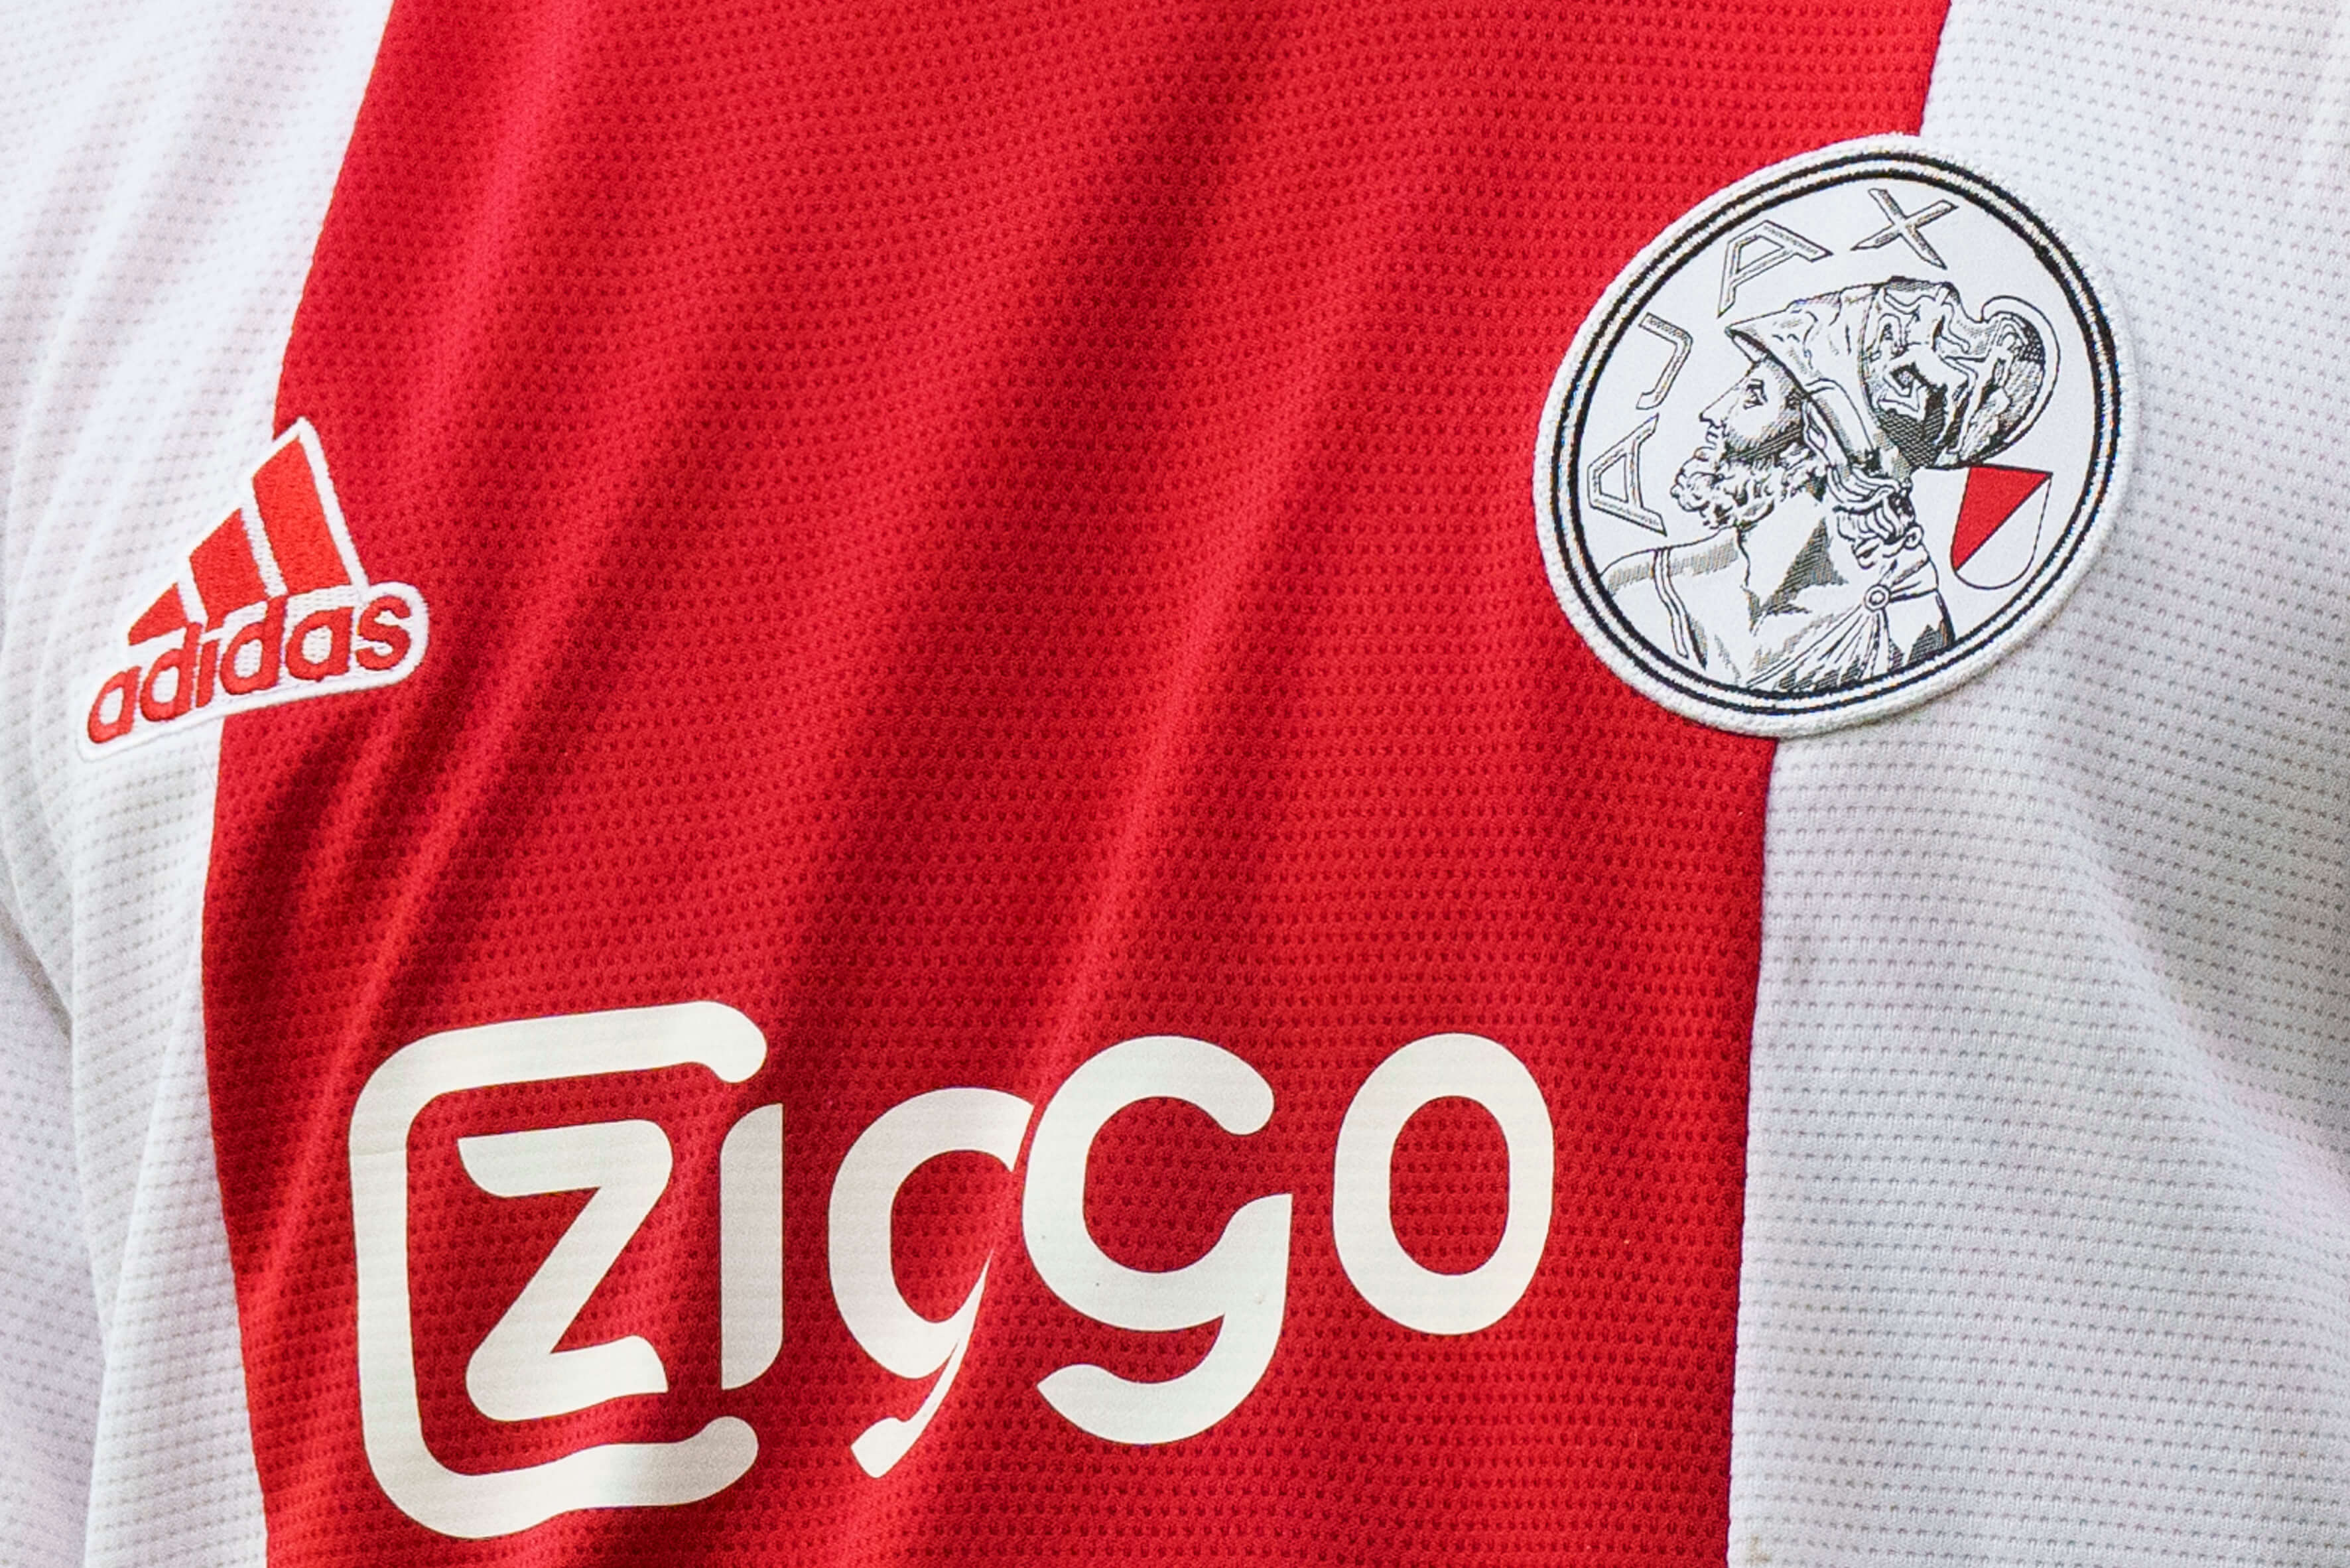 Ajax na nederlaag tegen Sporting uitgeschakeld in Youth League; image source: Pro Shots